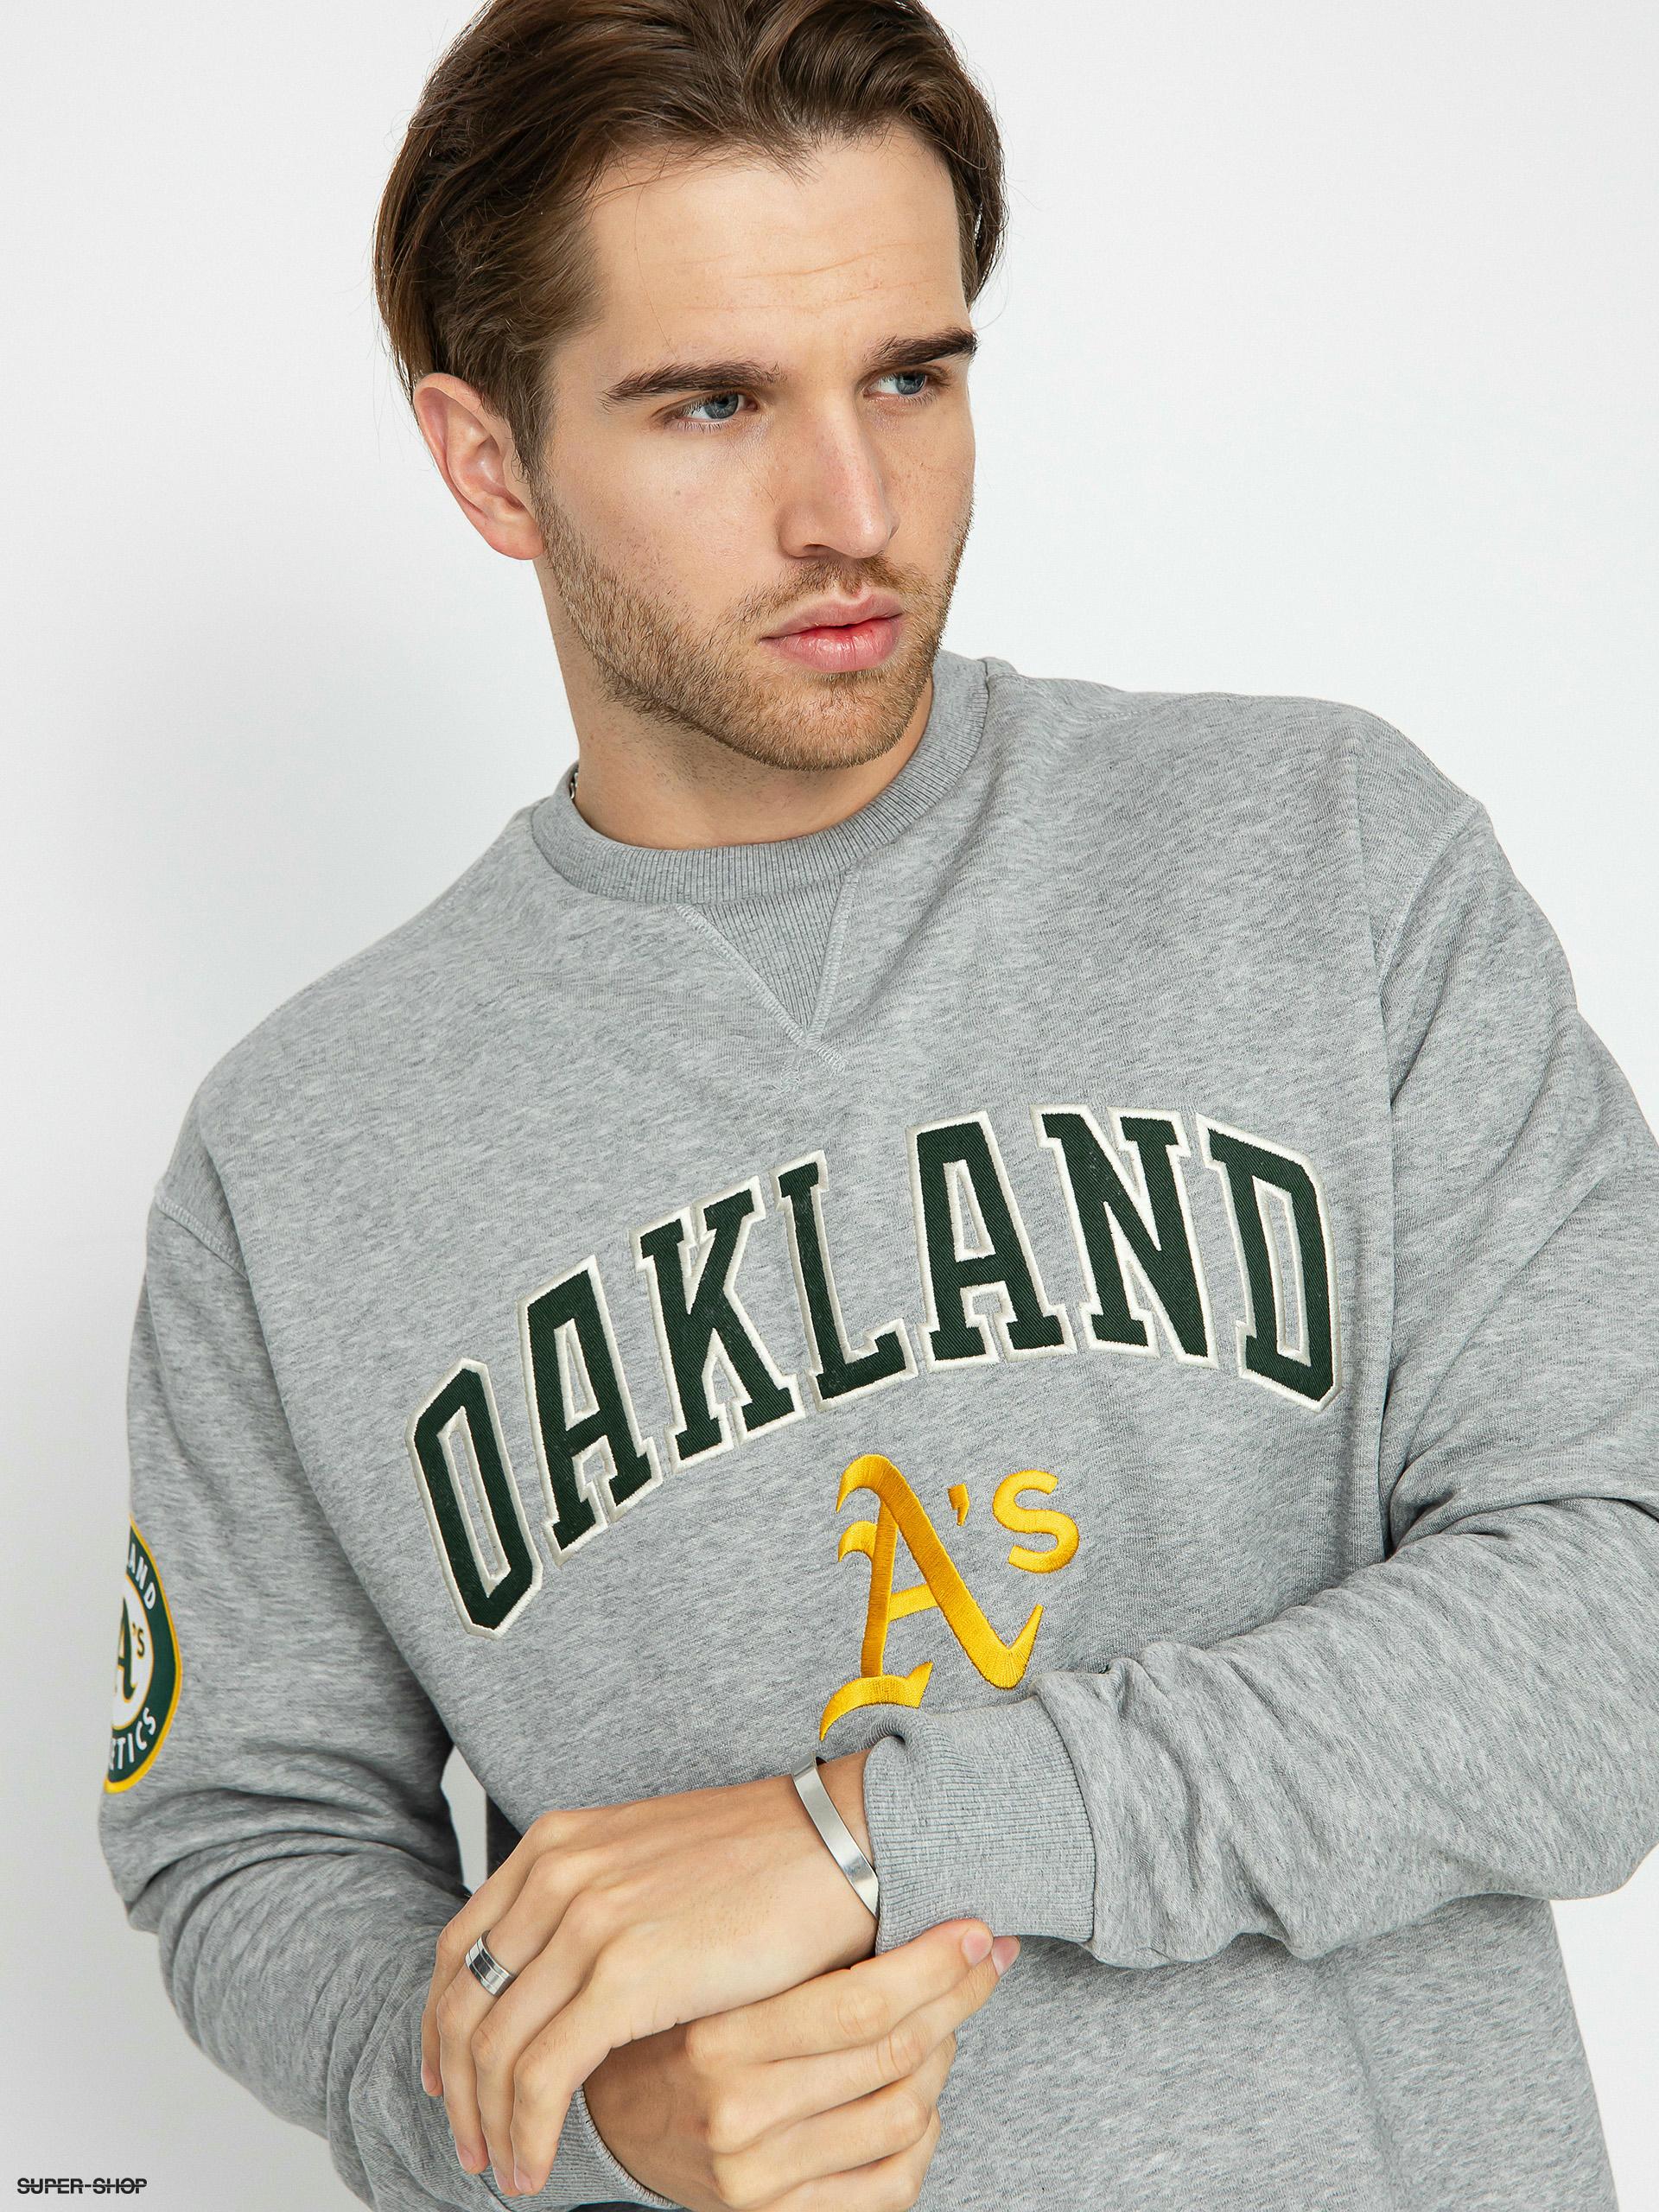 Oakland Athletics Fanatics Branded Weathered Official Logo Tri-Blend  T-Shirt - Green